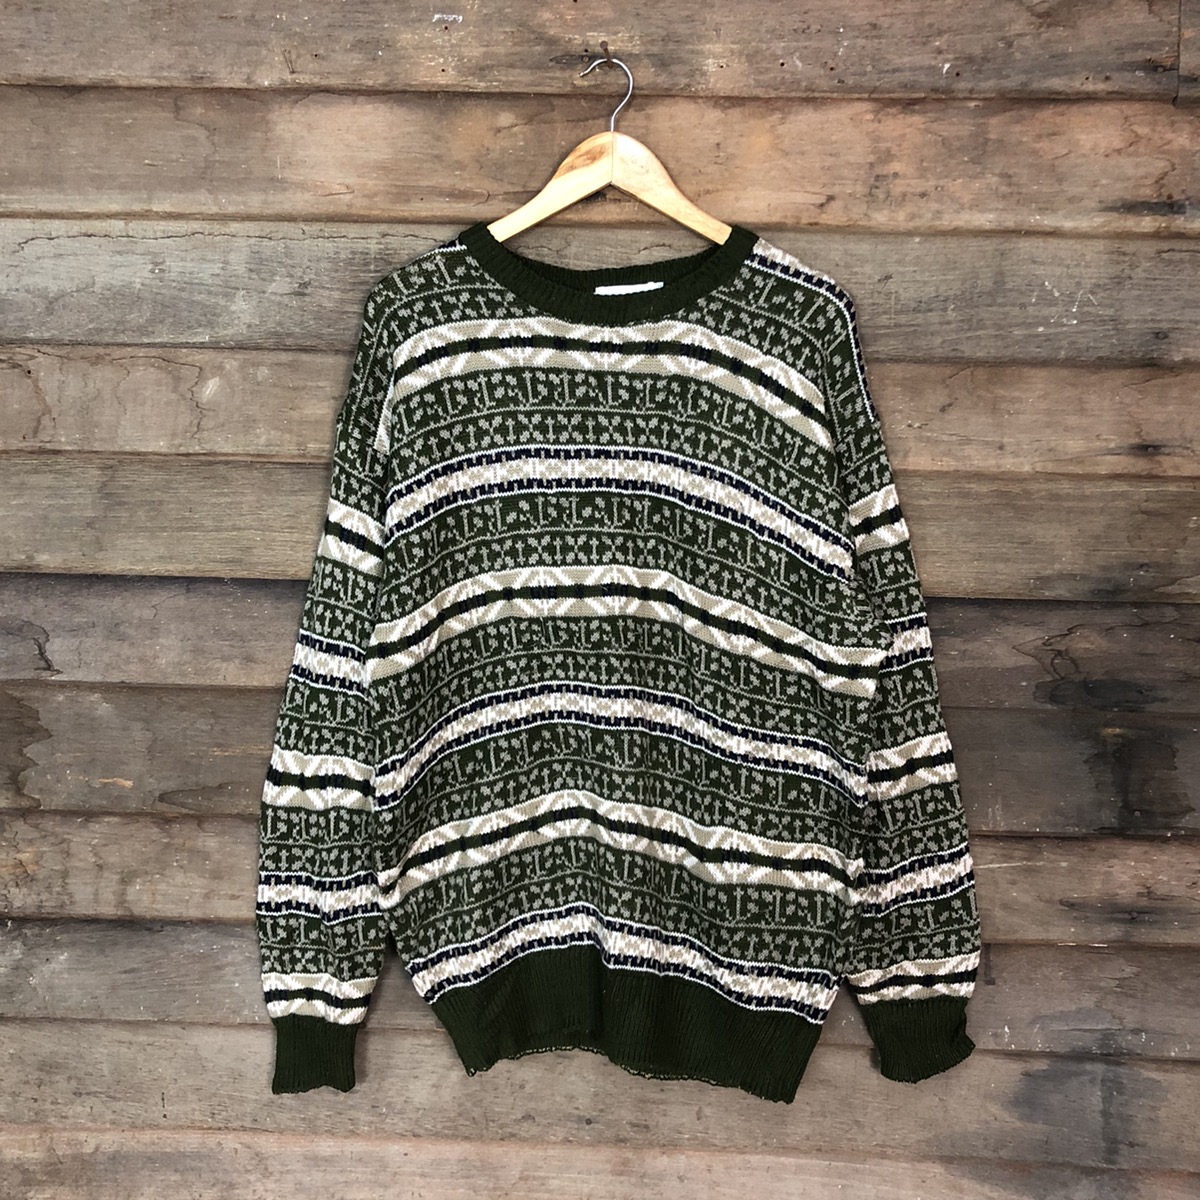 Homespun Knitwear - Yes Pleeze Patterned Knit Sweater - 1